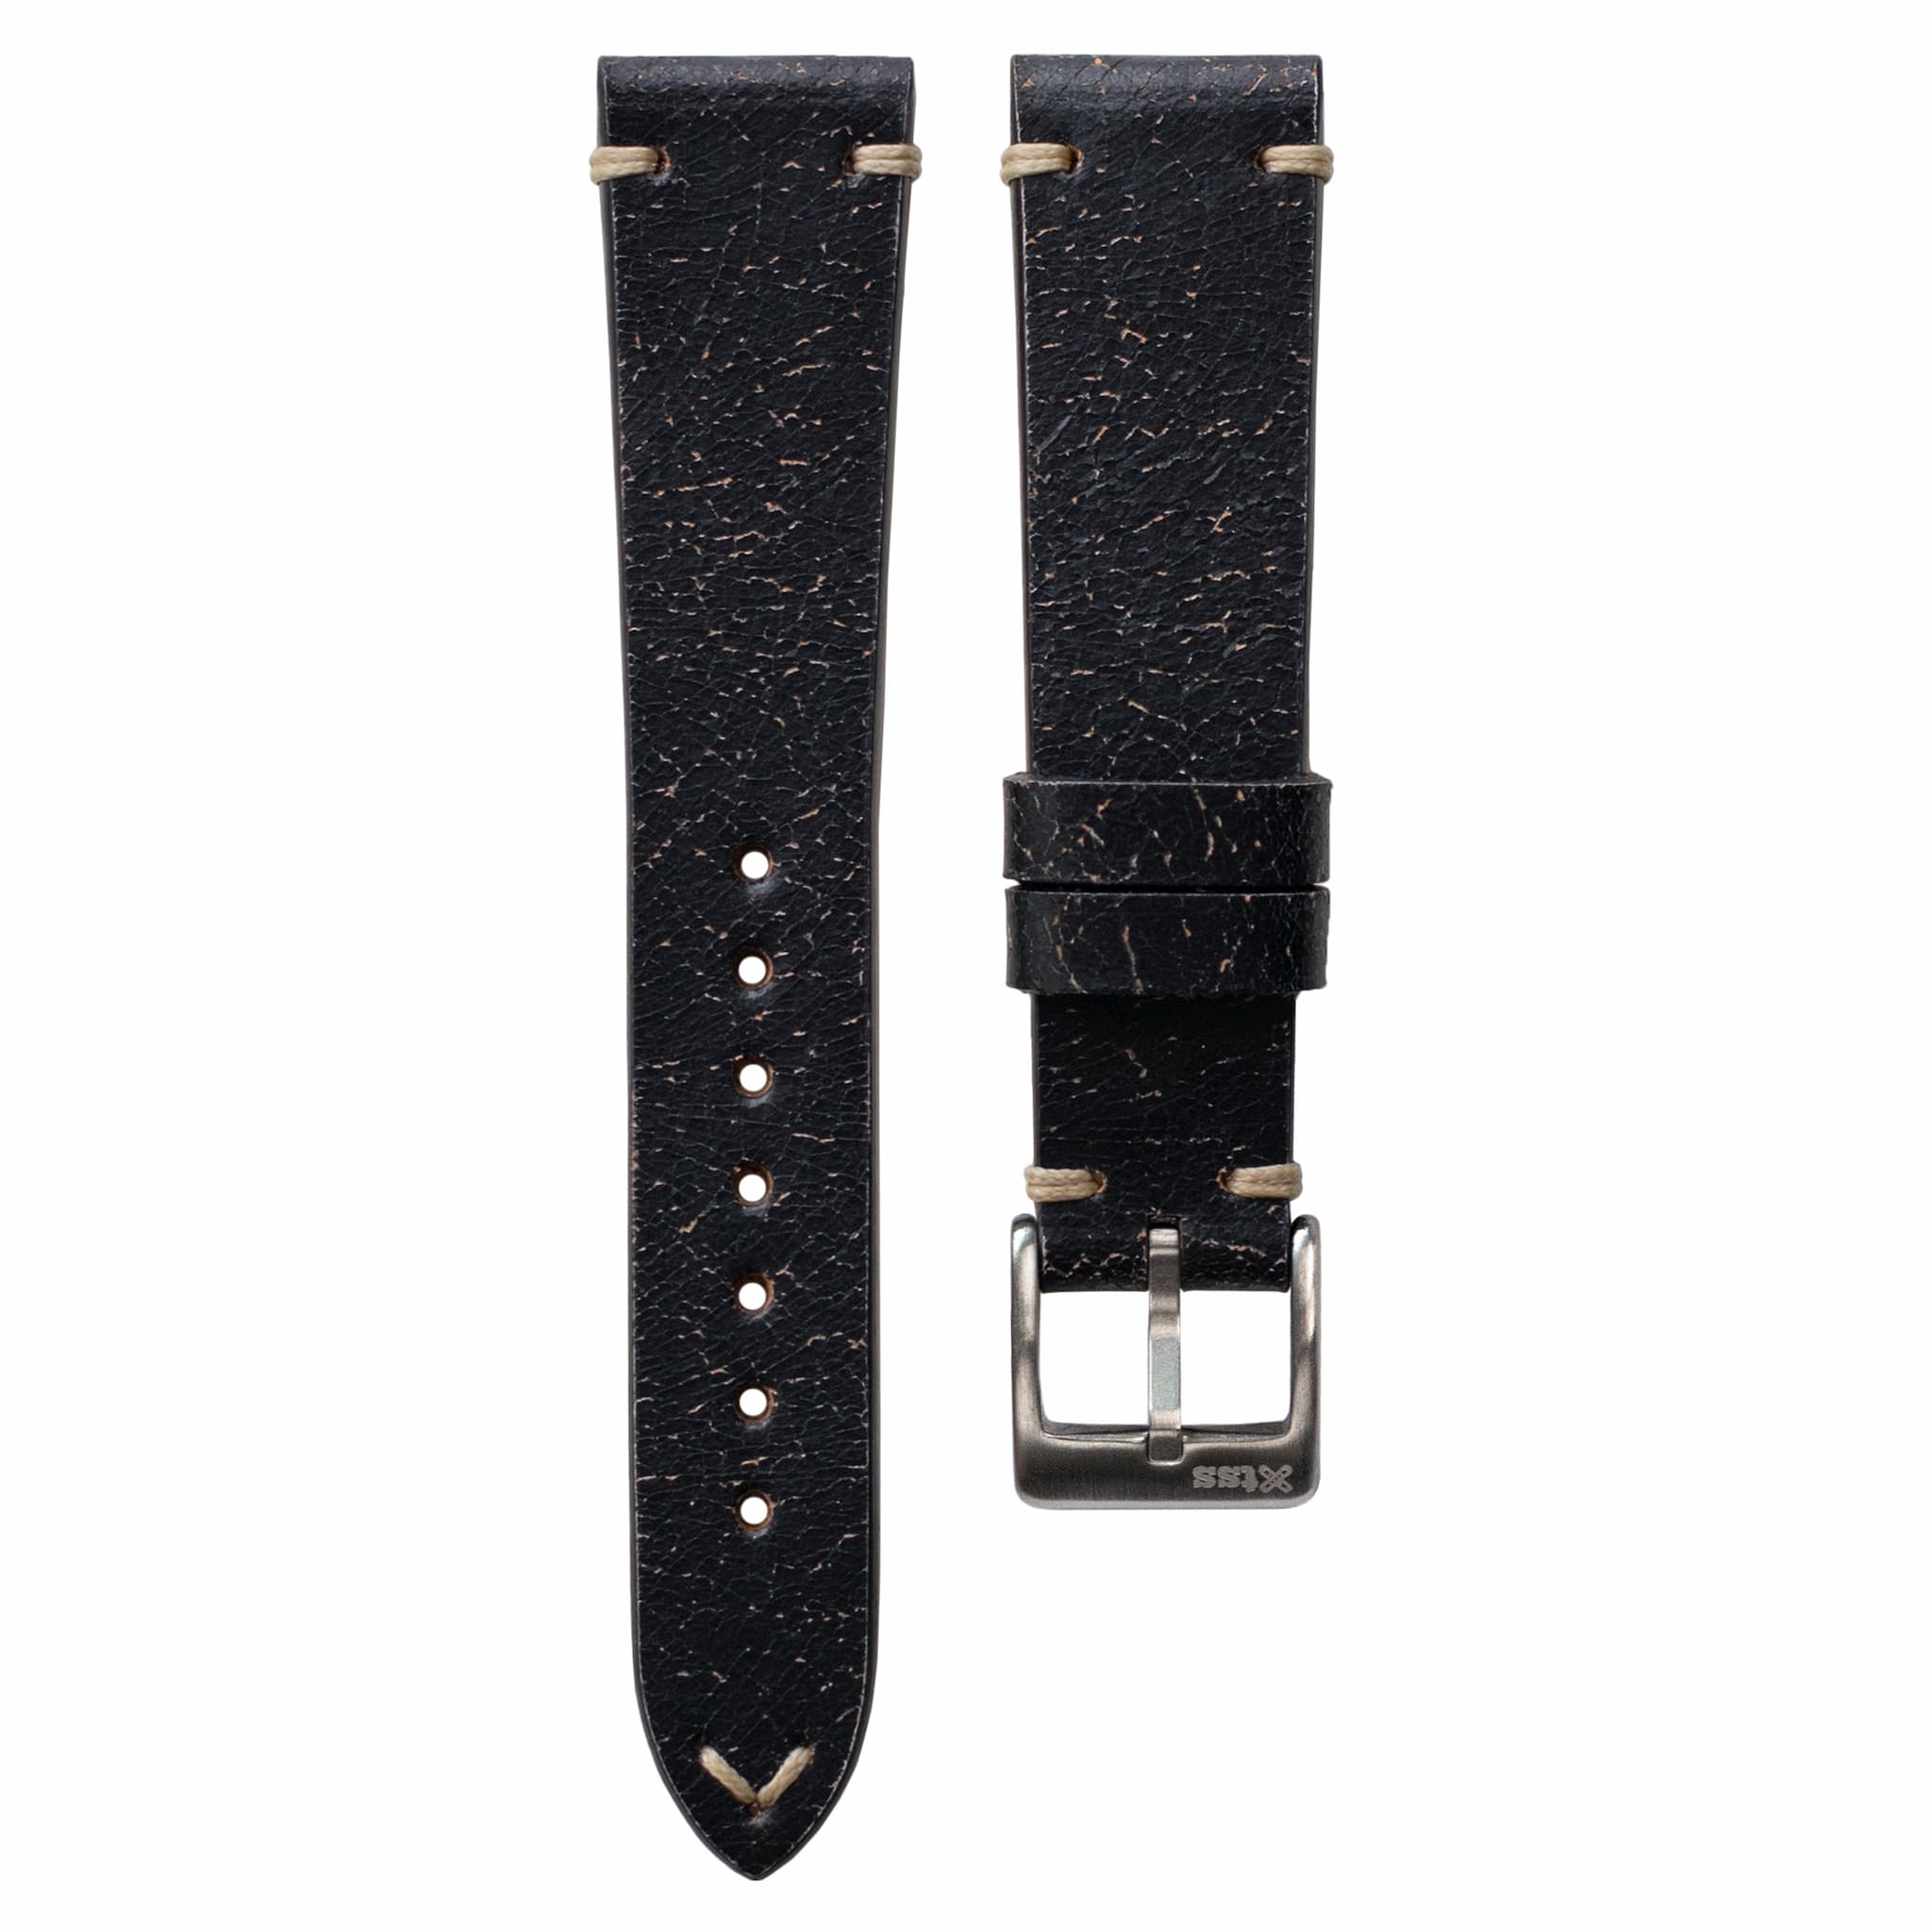 Two-Stitch Vintage Black Leather Watch Strap